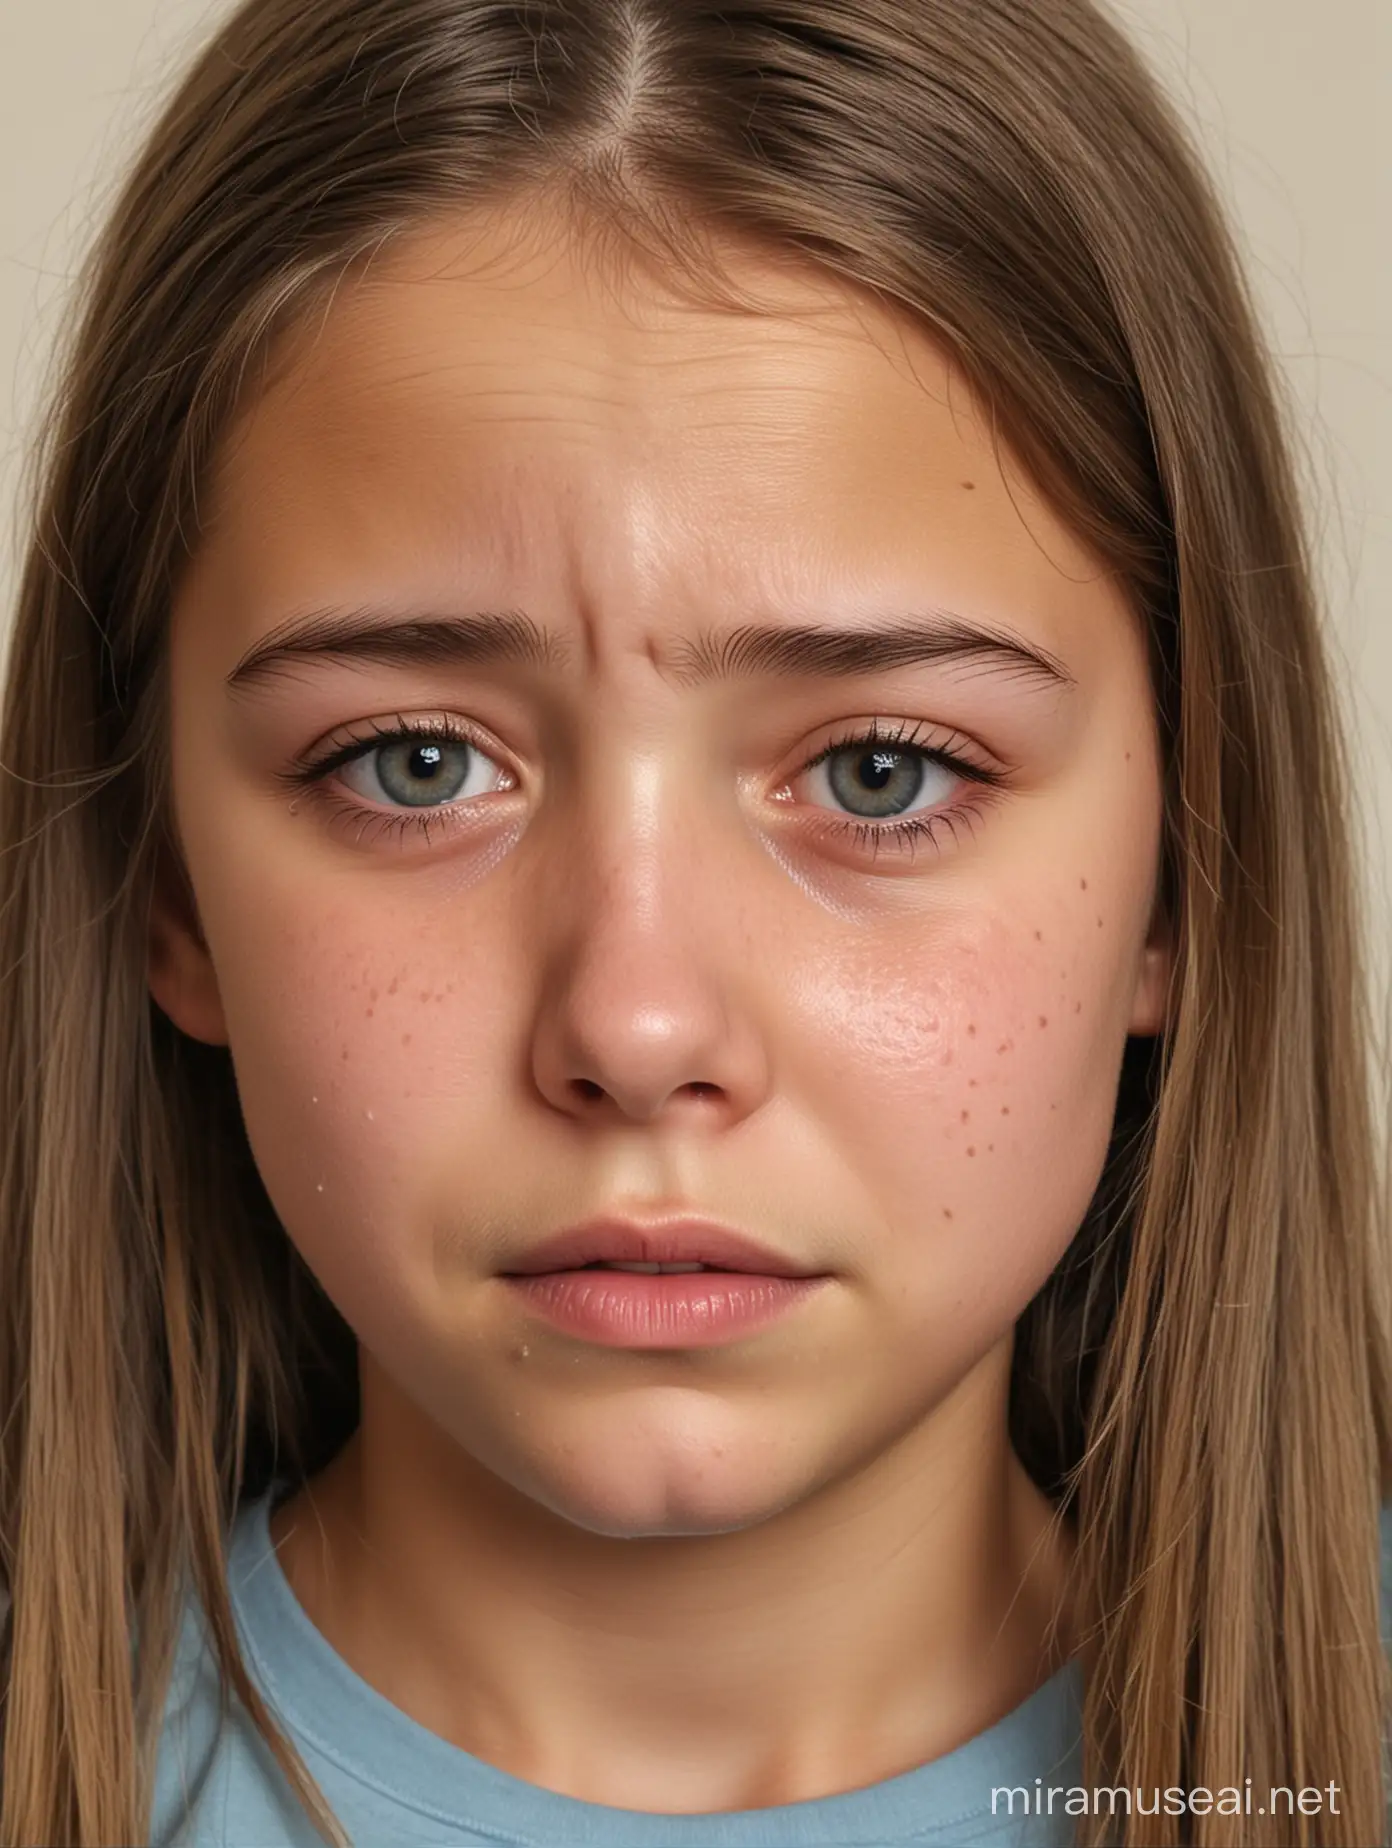 Teenage Girl with Tears Reflecting Emotional Turmoil